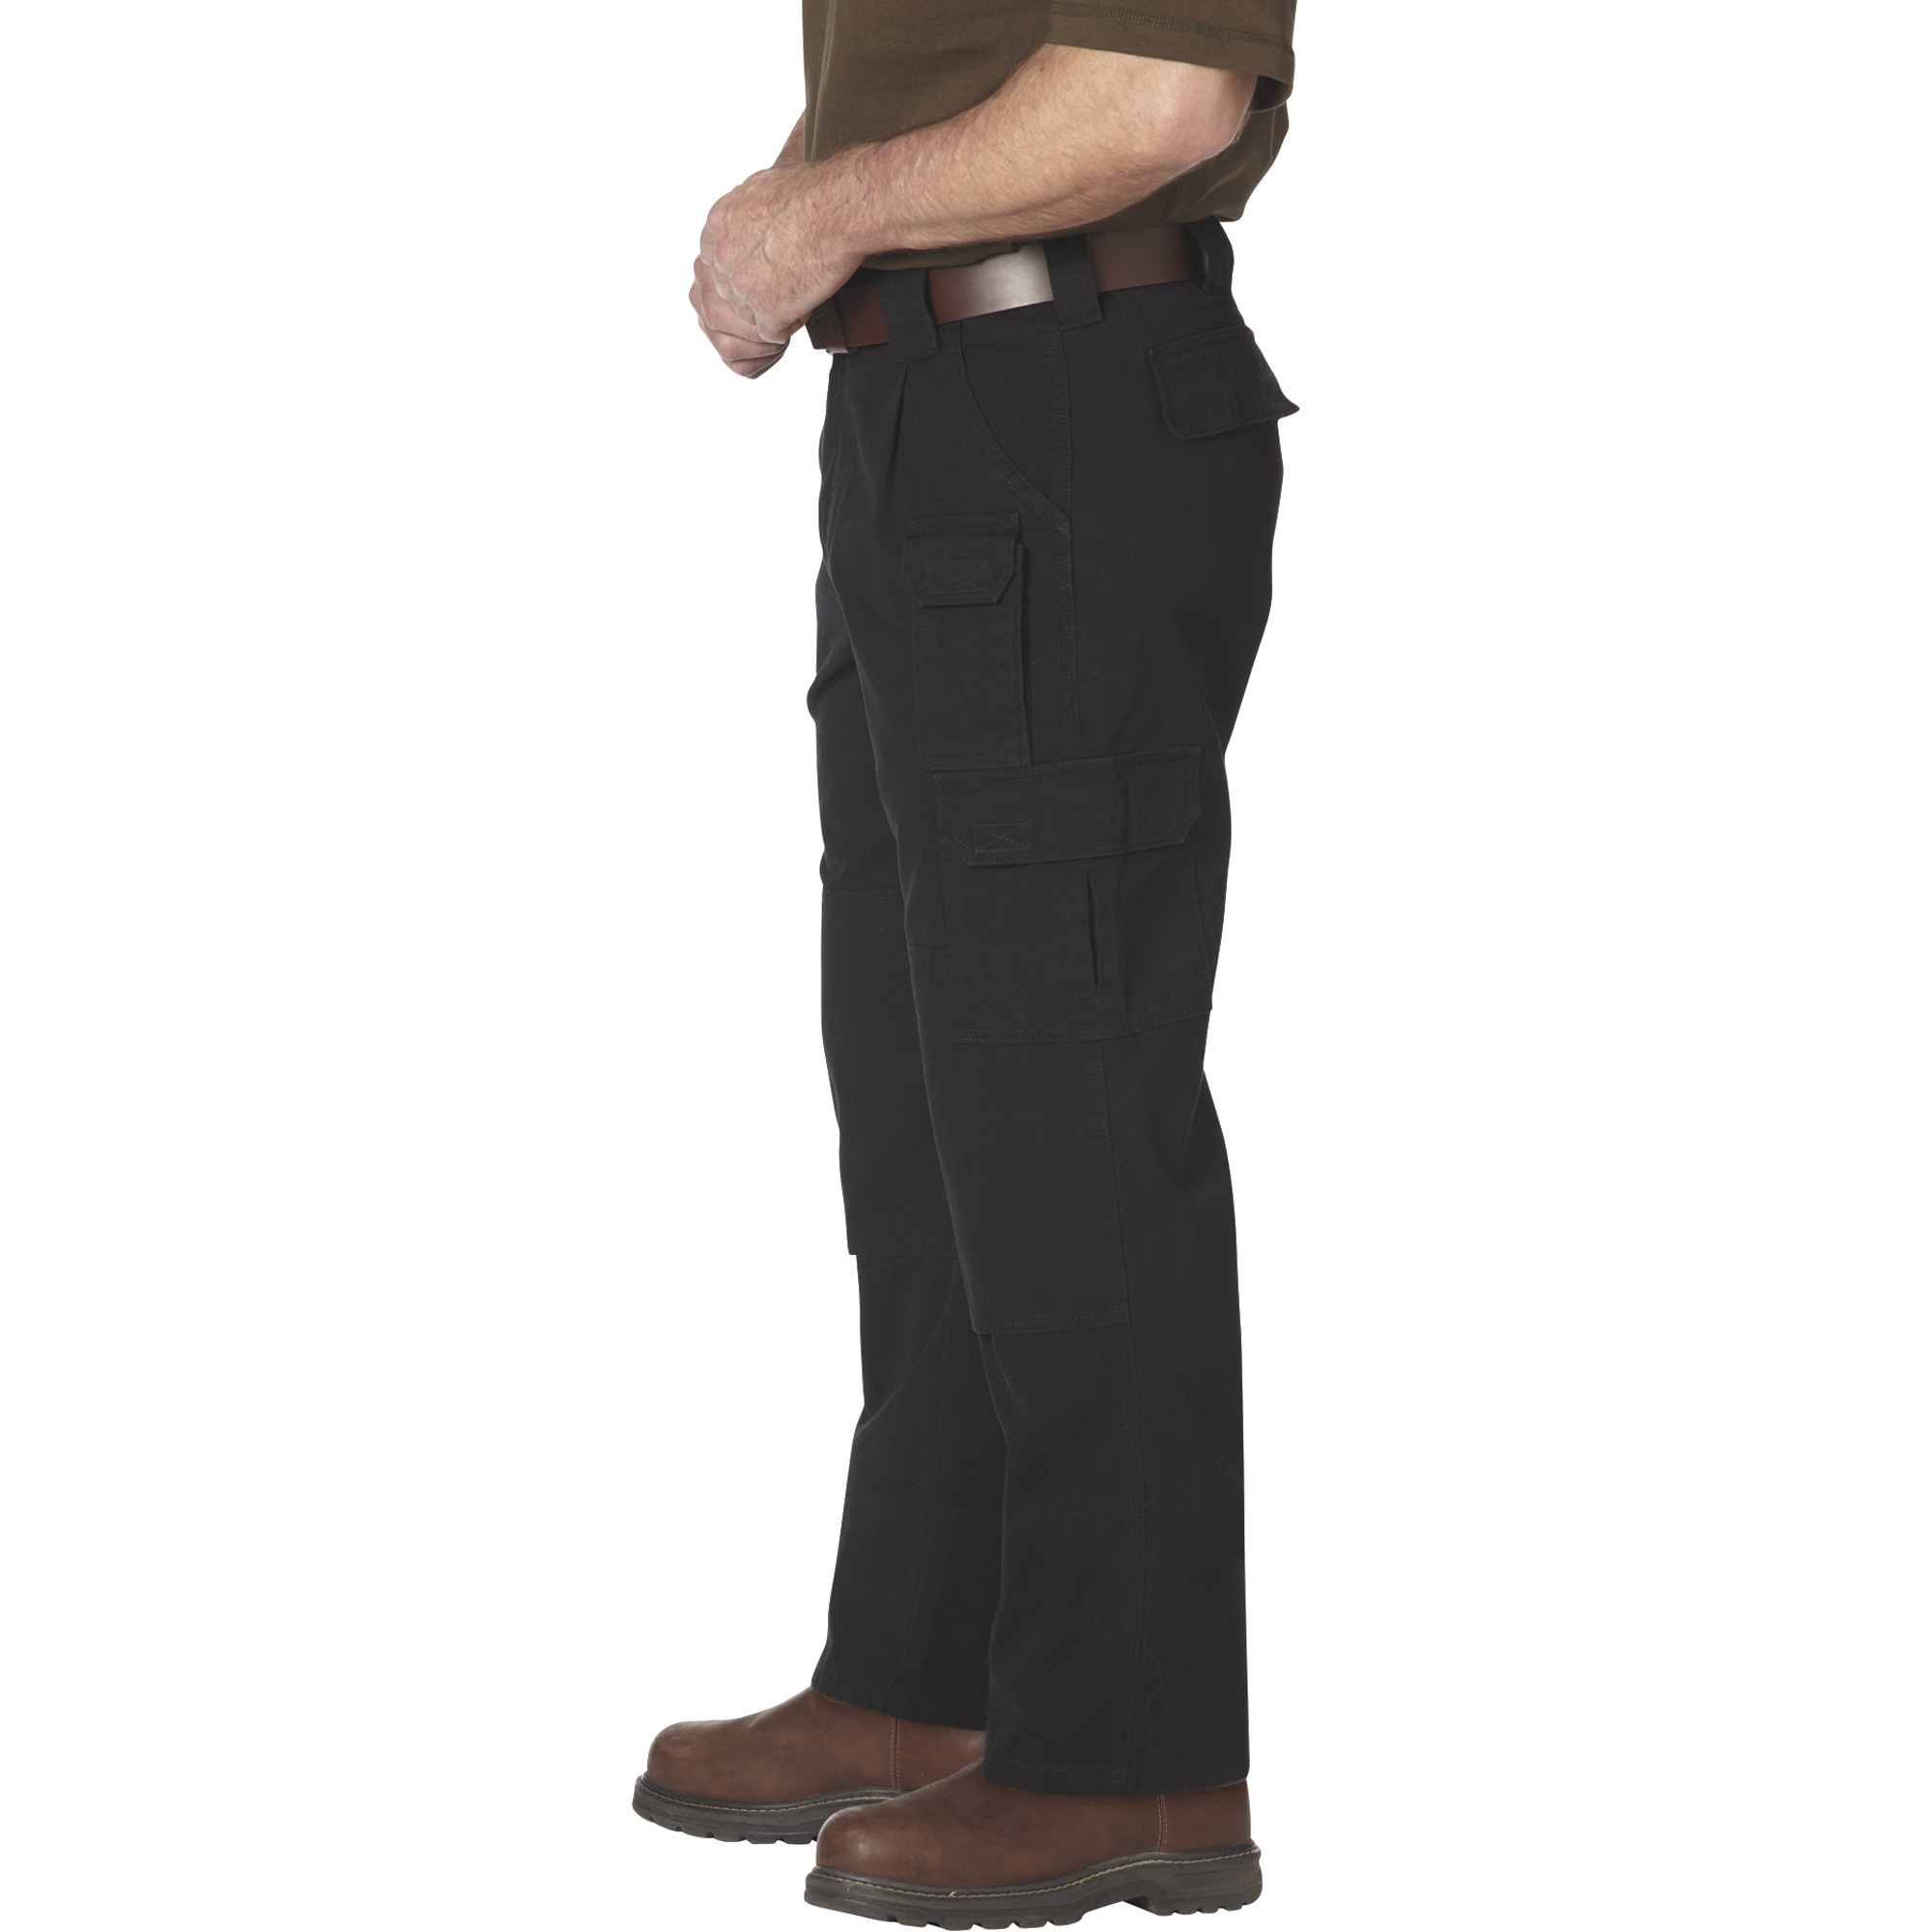 Gravel Gear Men's 7-Pocket Tactical Pants with Teflon - Black, 40Inch Waist x 32Inch Inseam